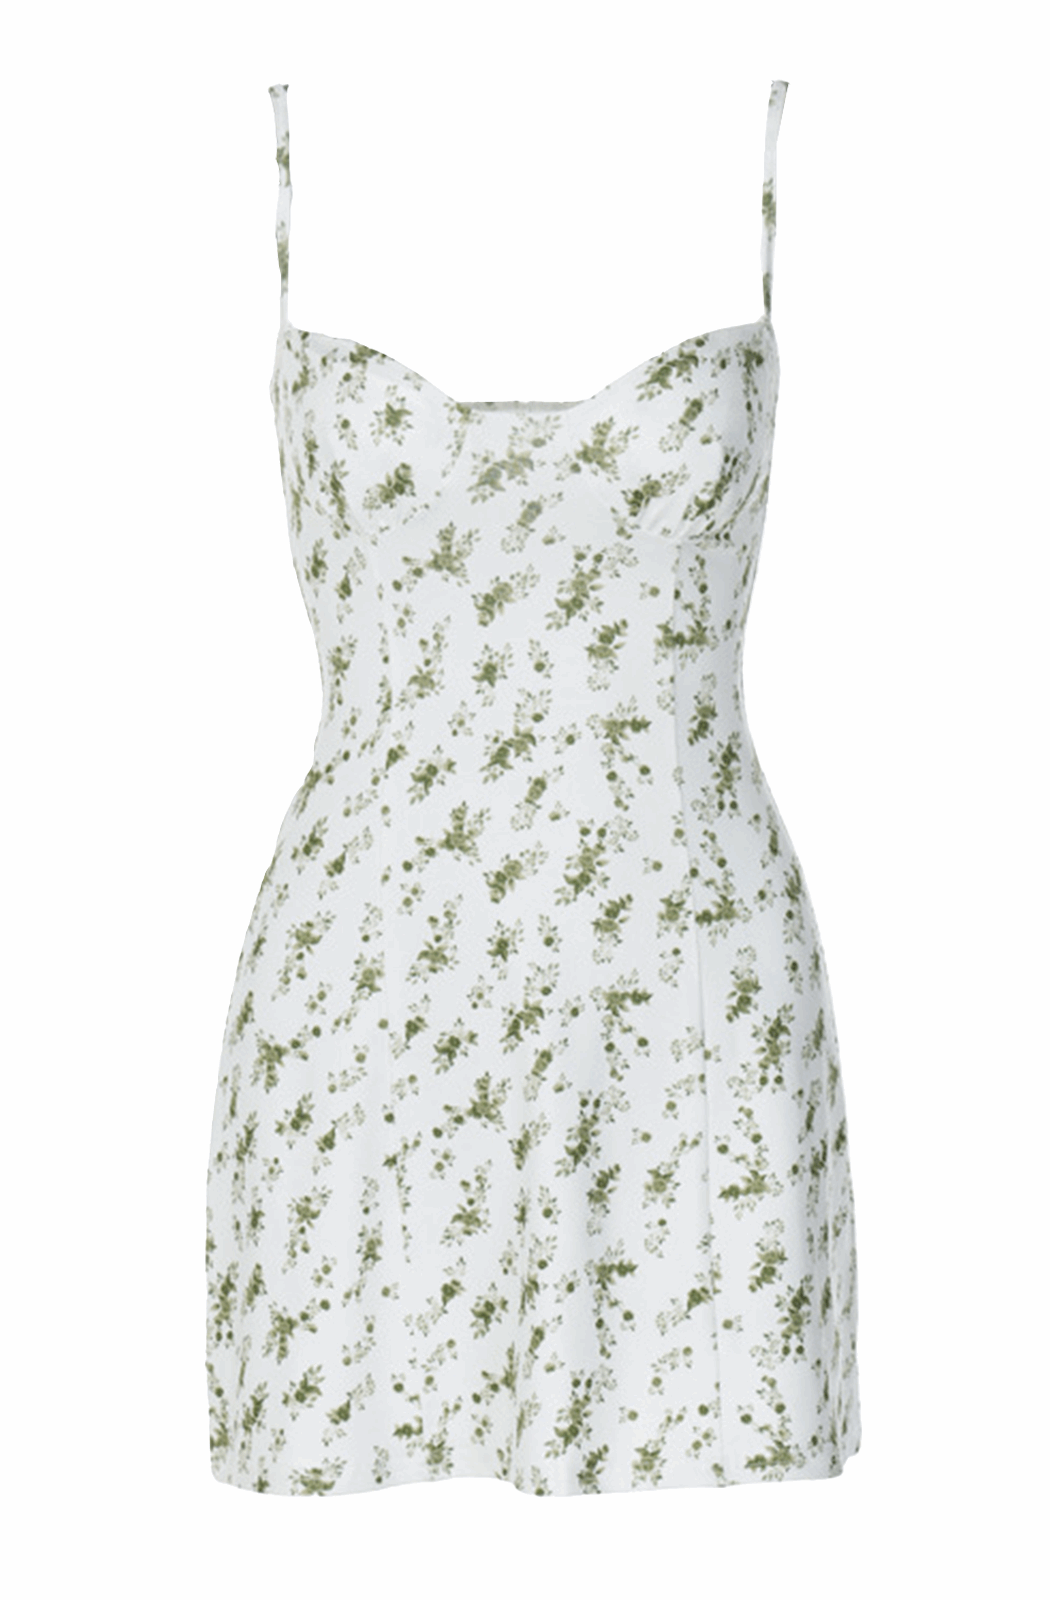 Short white floral dress